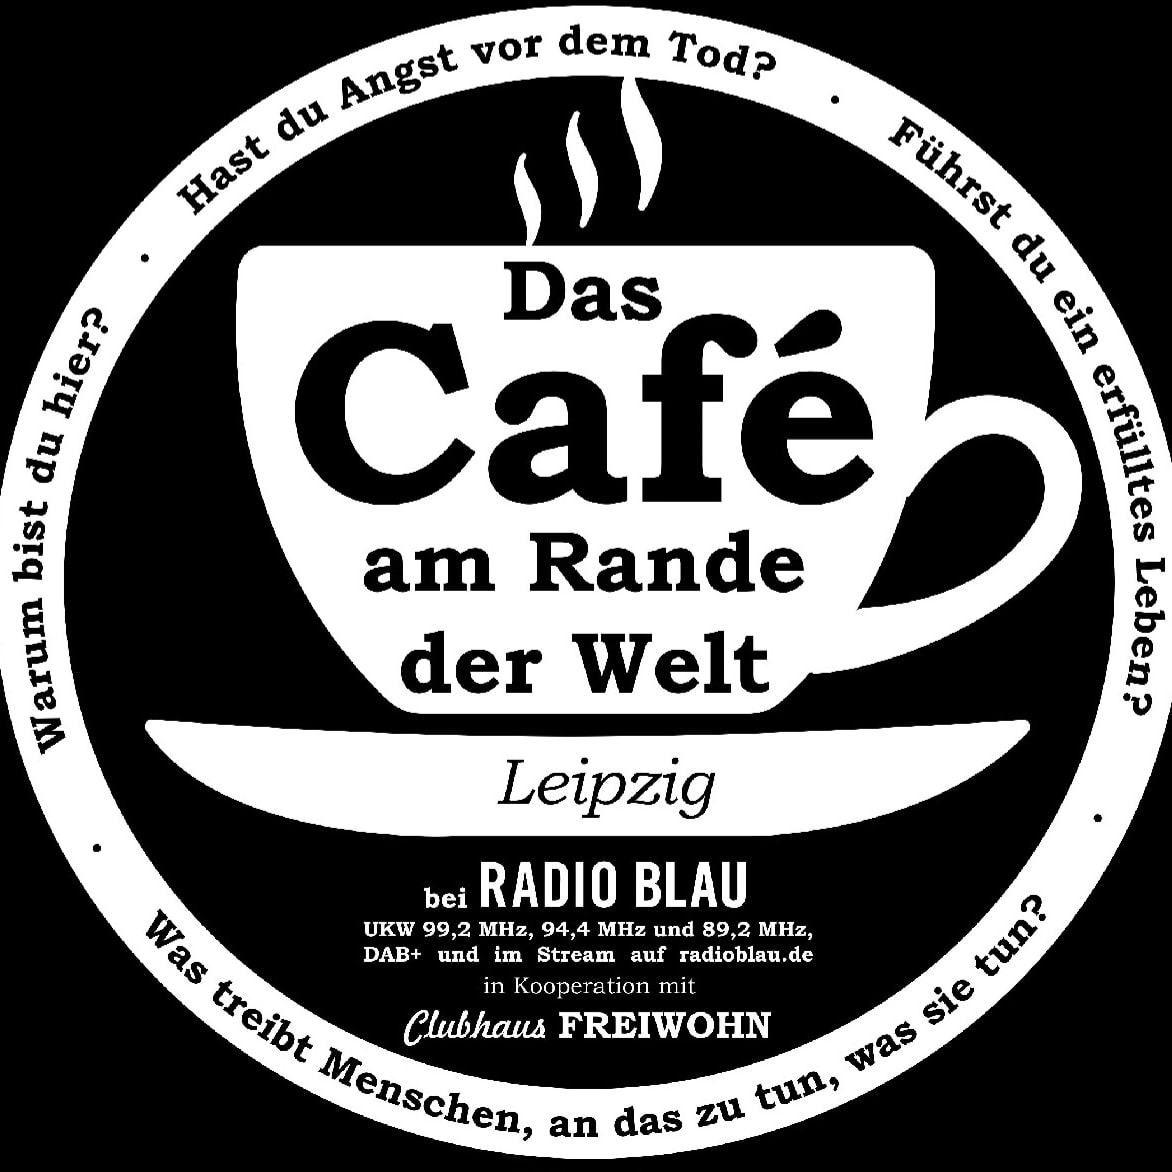 Das Café am Rande der Welt - Leipzig – Sinn des Lebens in de (Banner)